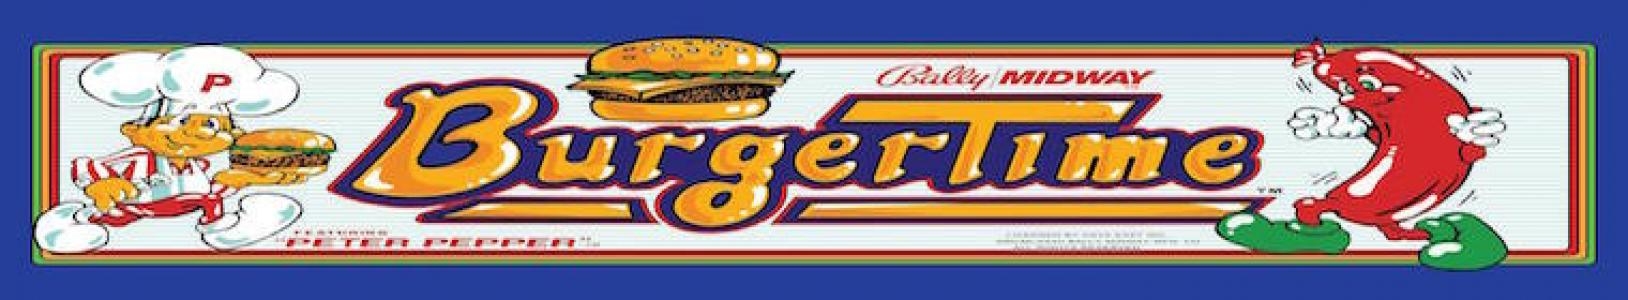 BurgerTime banner